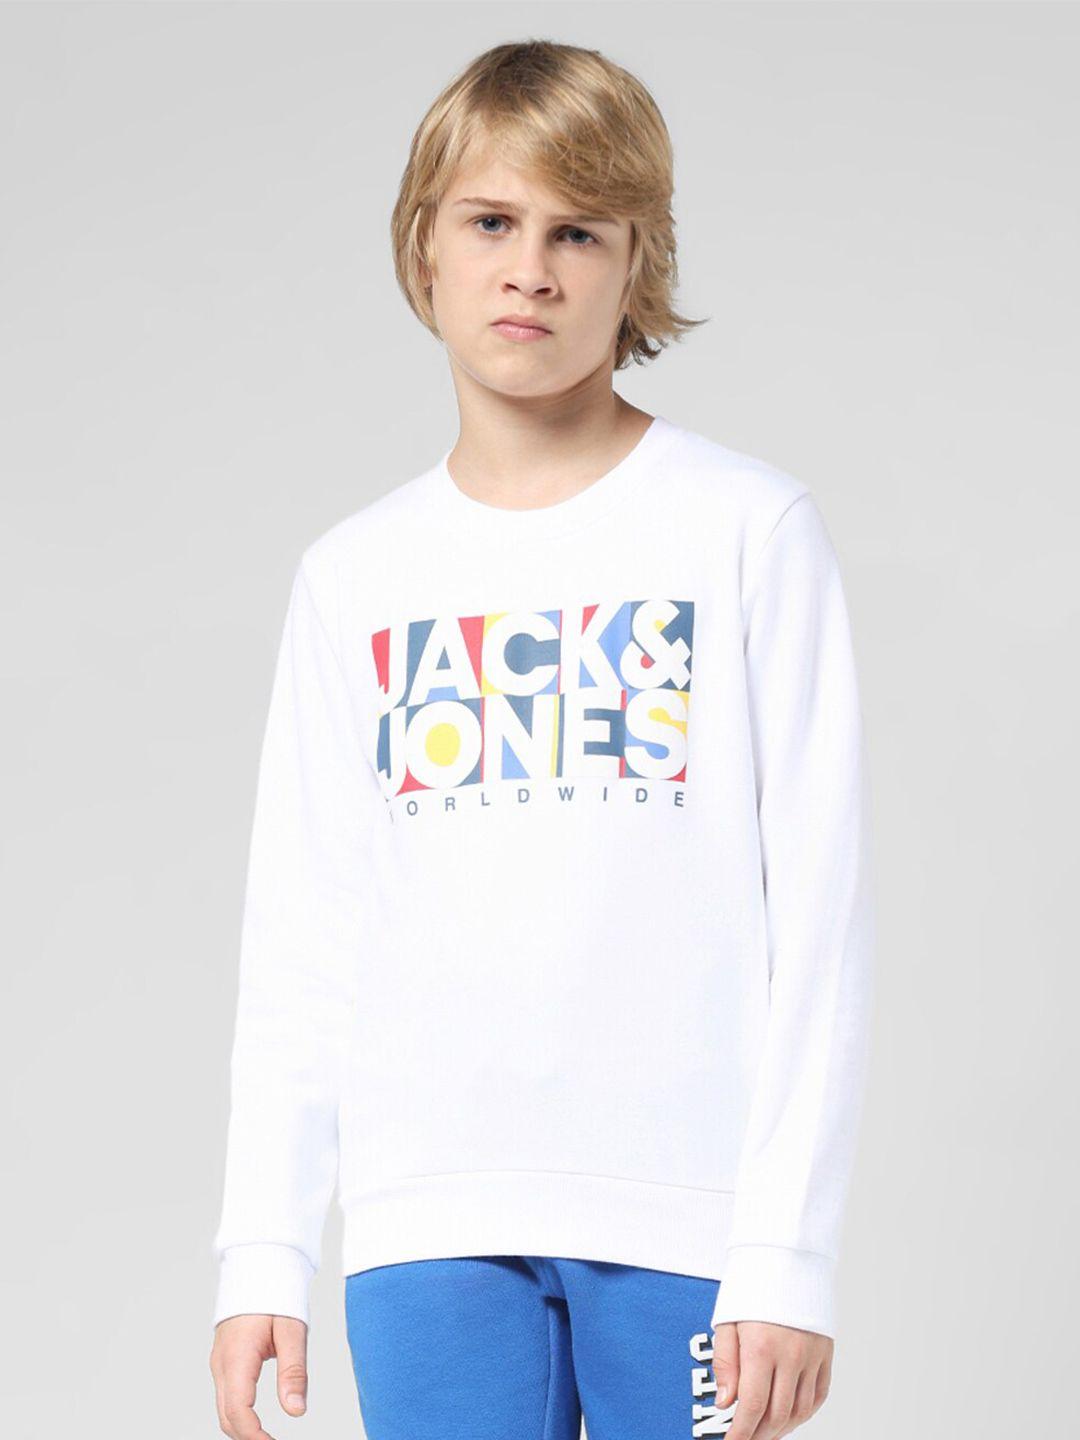 jack & jones junior boys typography printed round neck cotton pullover sweatshirt